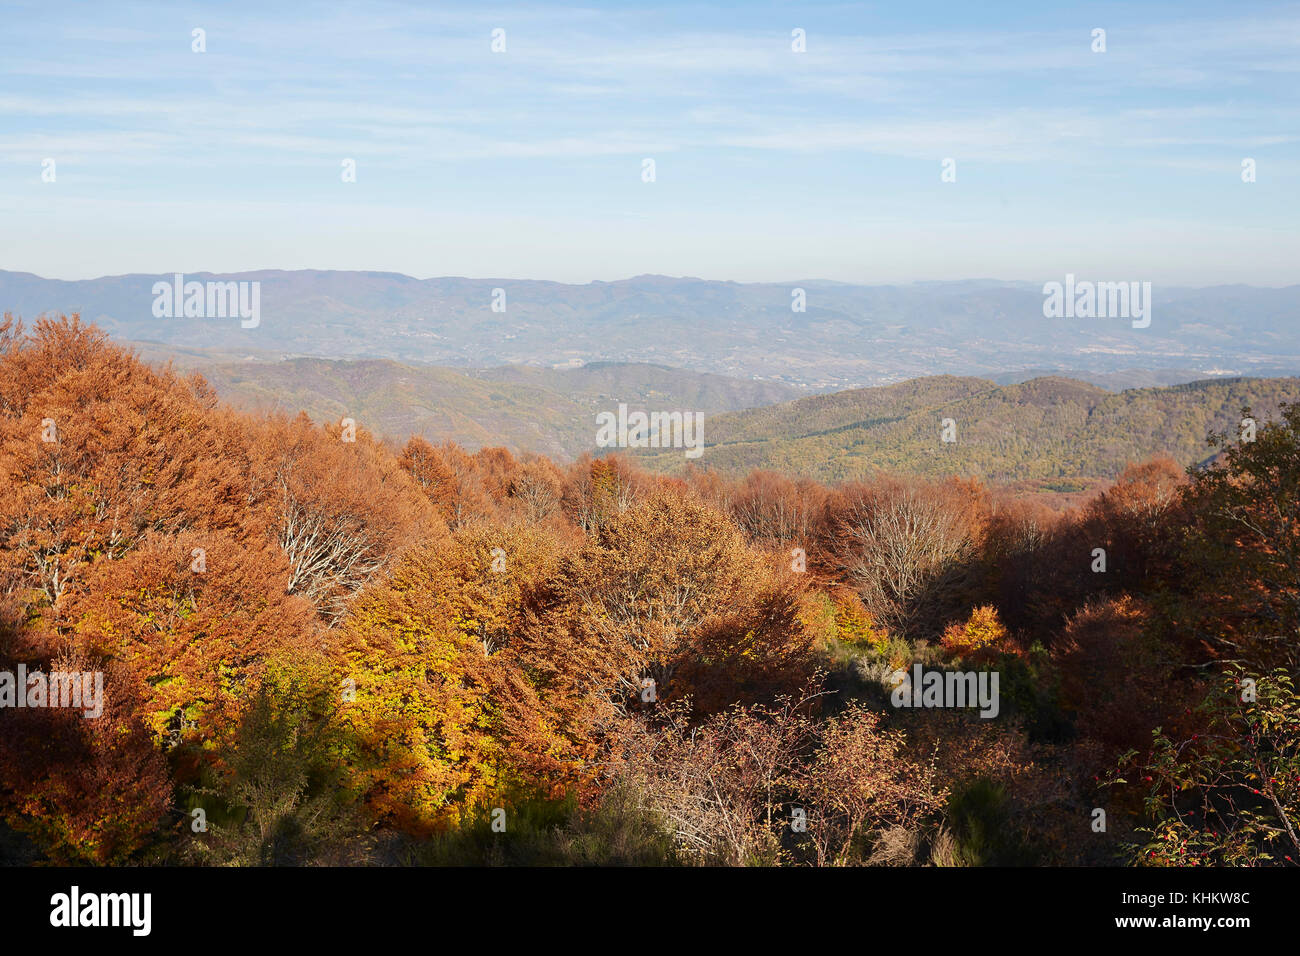 Brightly coloured autumn Beech trees, Fagus sylvatica, in 'Foresta di Sant'antonio', mountains of Pratomagno, Valdarno, Italy. Stock Photo